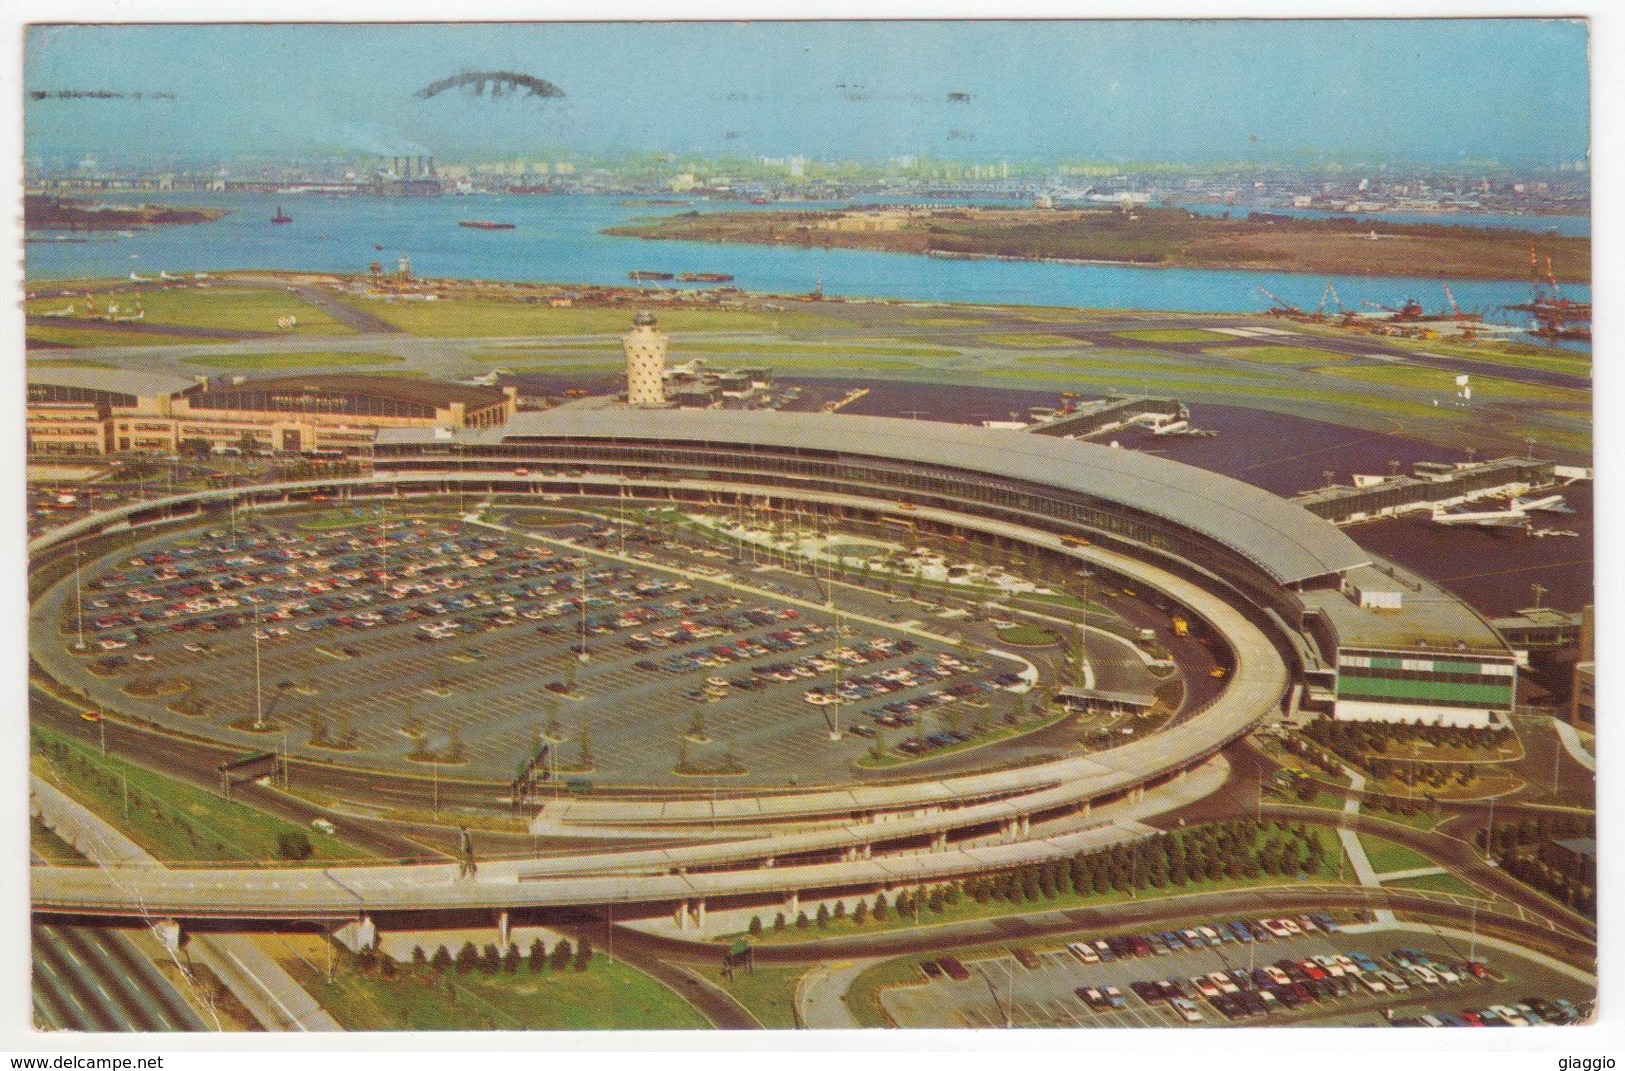 °°° 13792 - USA - NY - NEW YORK - LAGUARDIA AIRPORT - 1973 With Stamps °°° - Aeropuertos